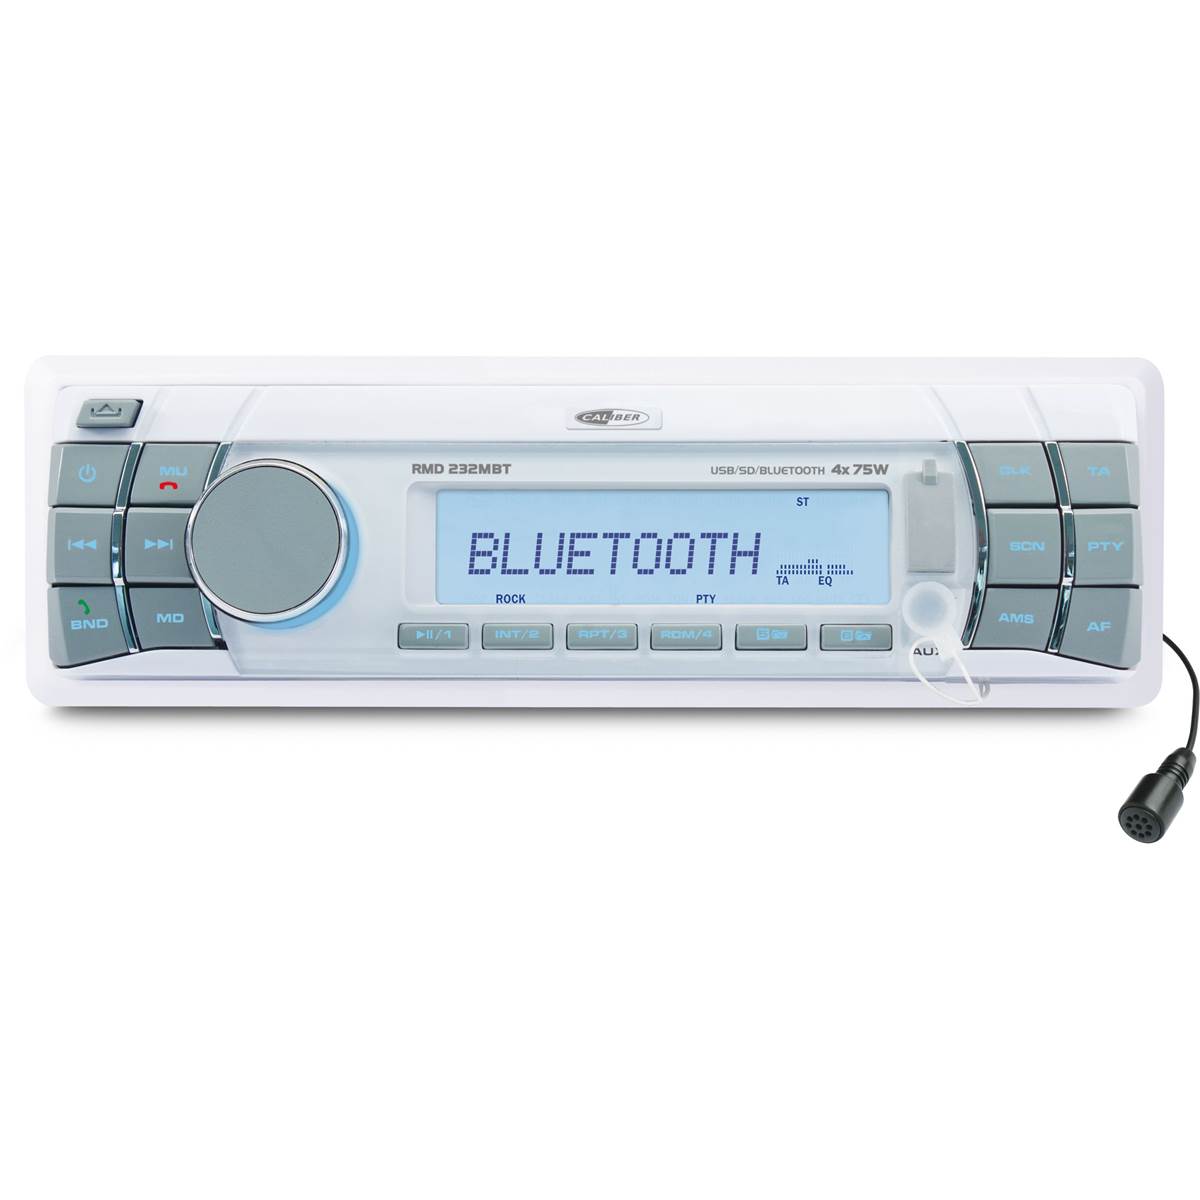 Autoradio Bluetooth Caliber Rmd232mbt